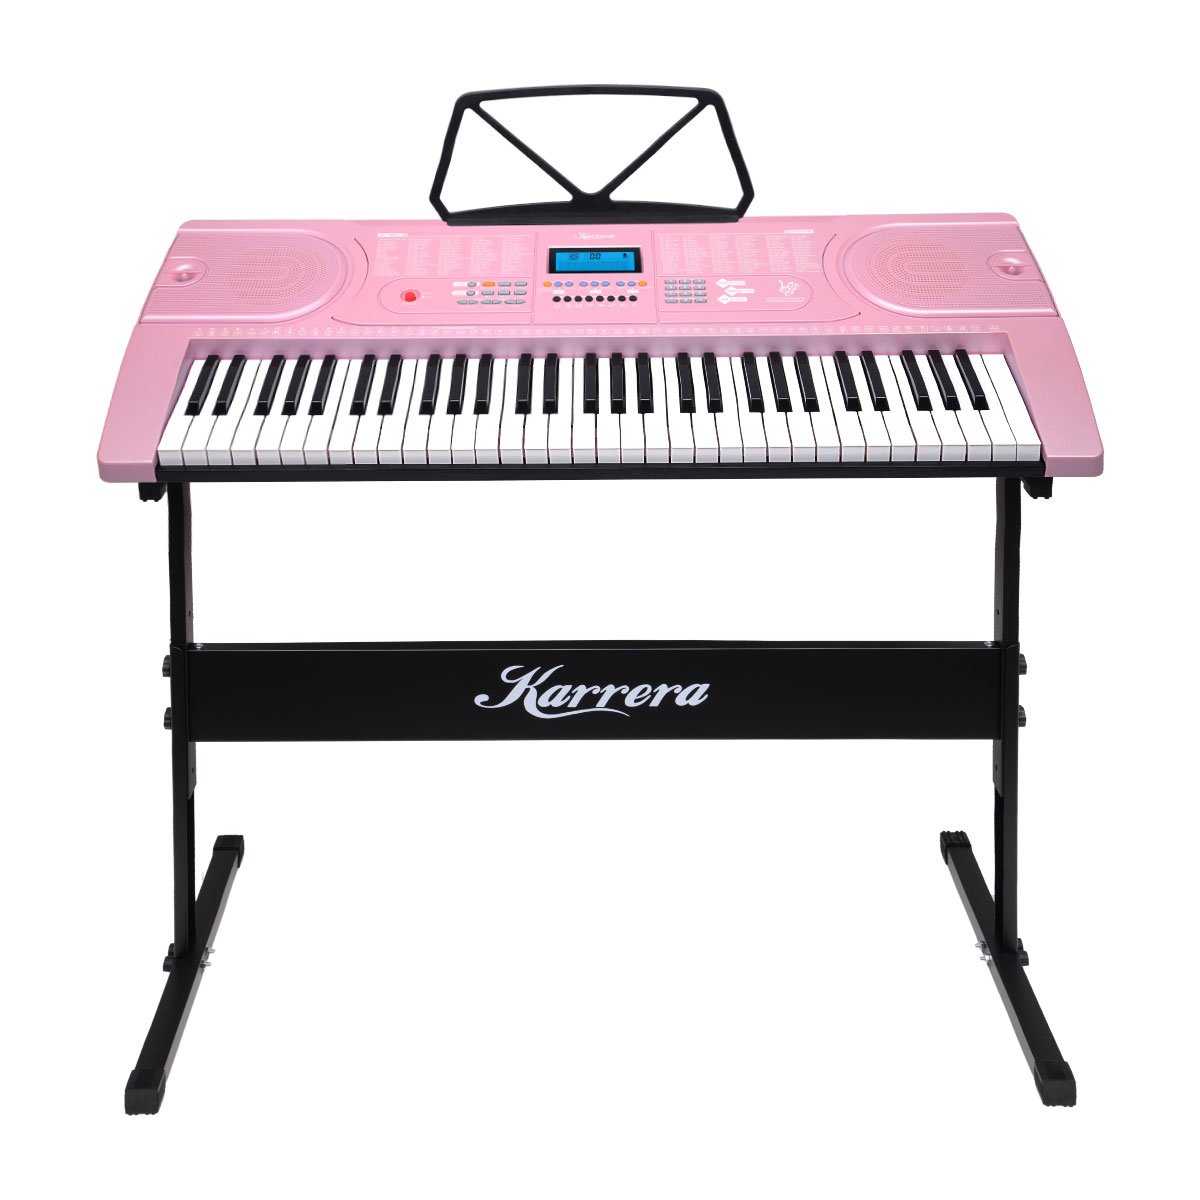 Karrera 61 Keys Electronic Keyboard Piano Music with Stand - Pink 2